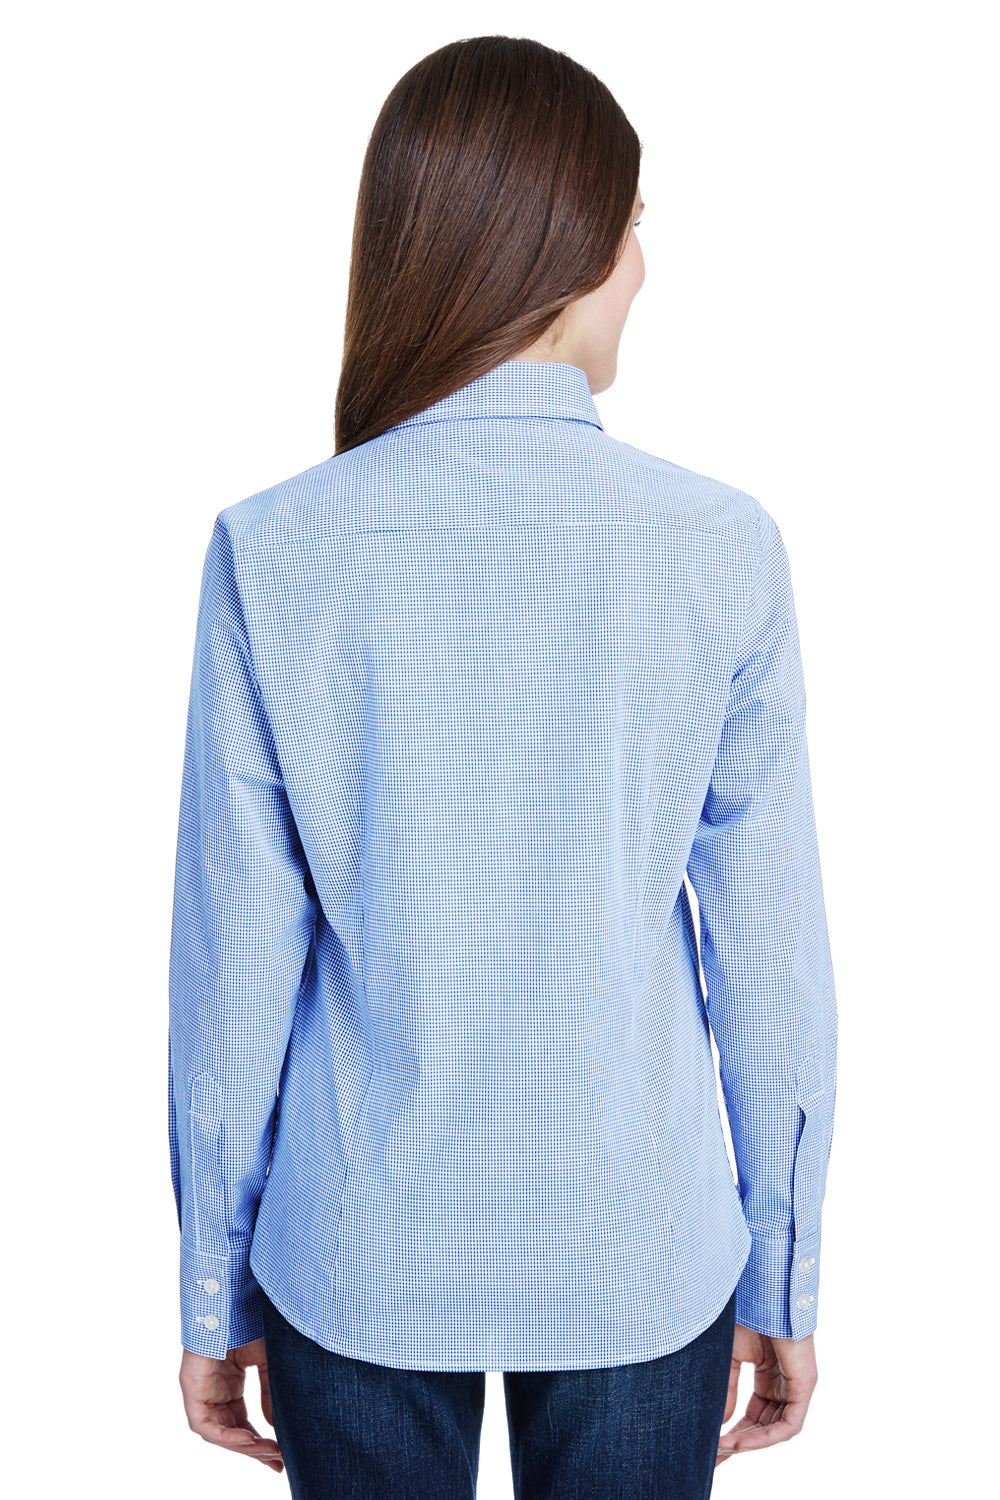 Artisan Collection RP320 Womens Microcheck Gingham Long Sleeve Button Down Shirt Light Blue/White Model Back